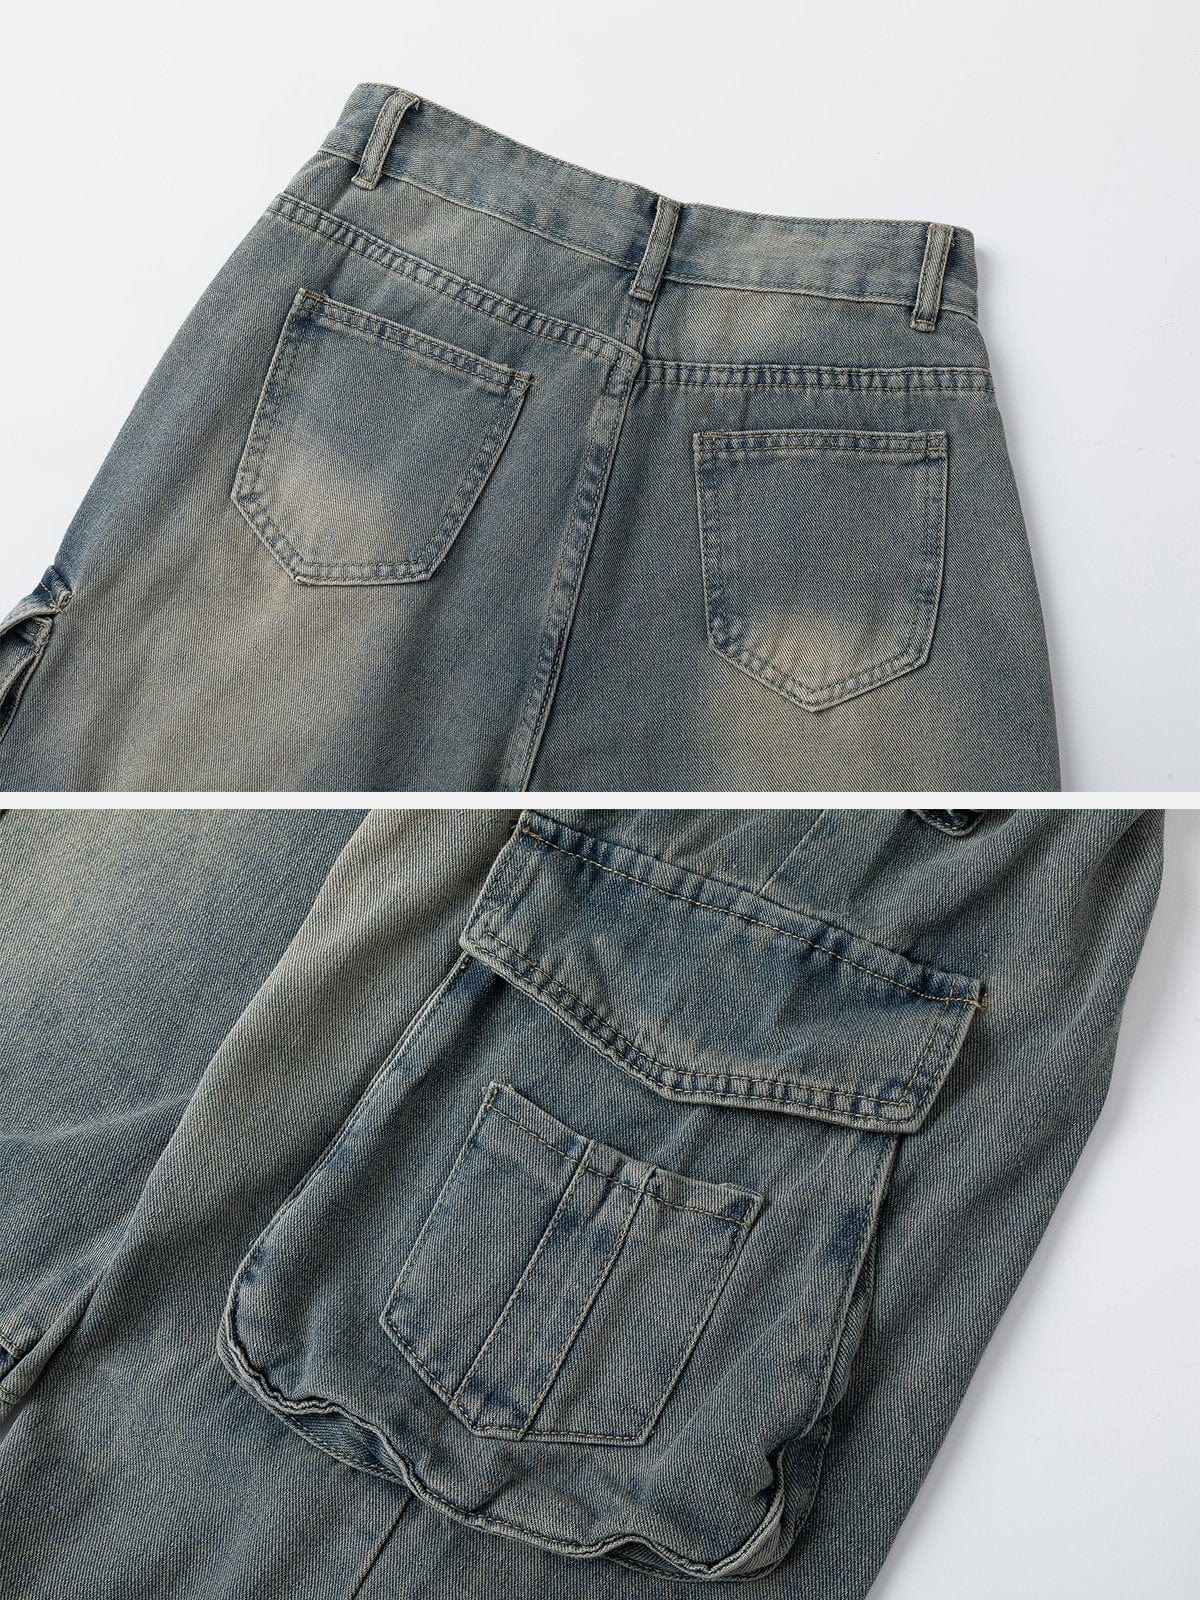 NEV Multi-Pocket Pleats Jeans